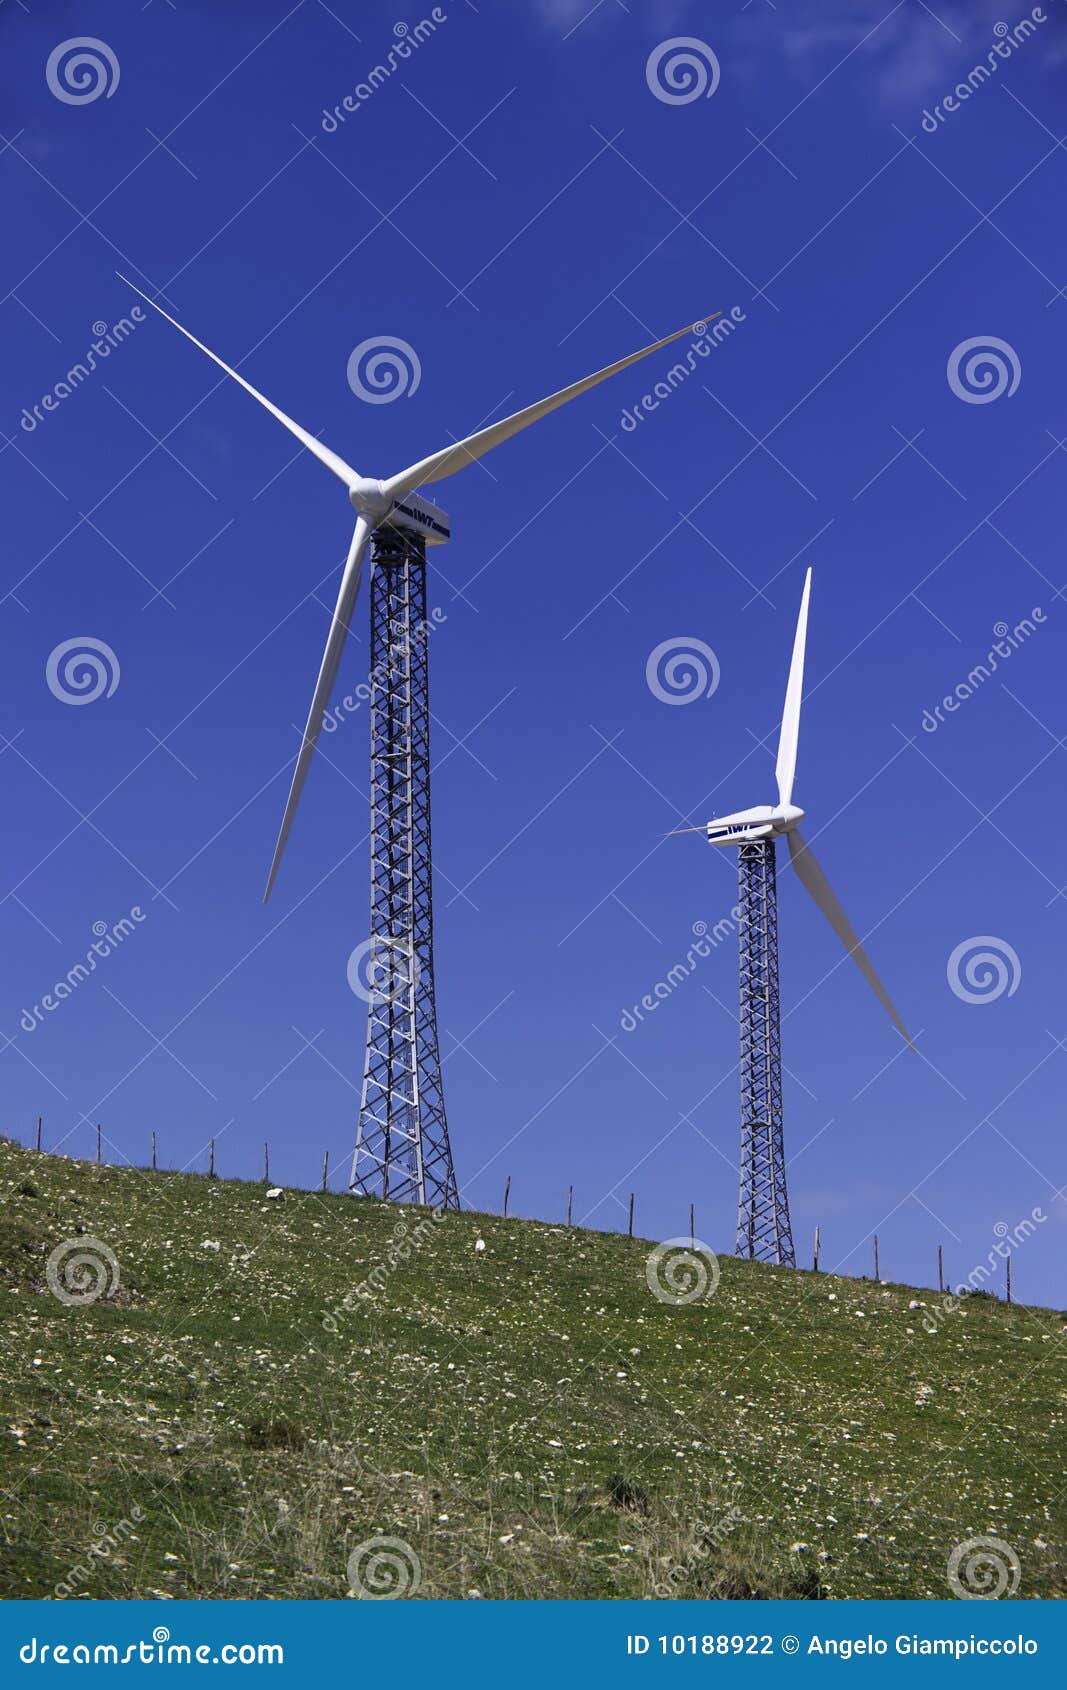 italy, eolic energy turbines